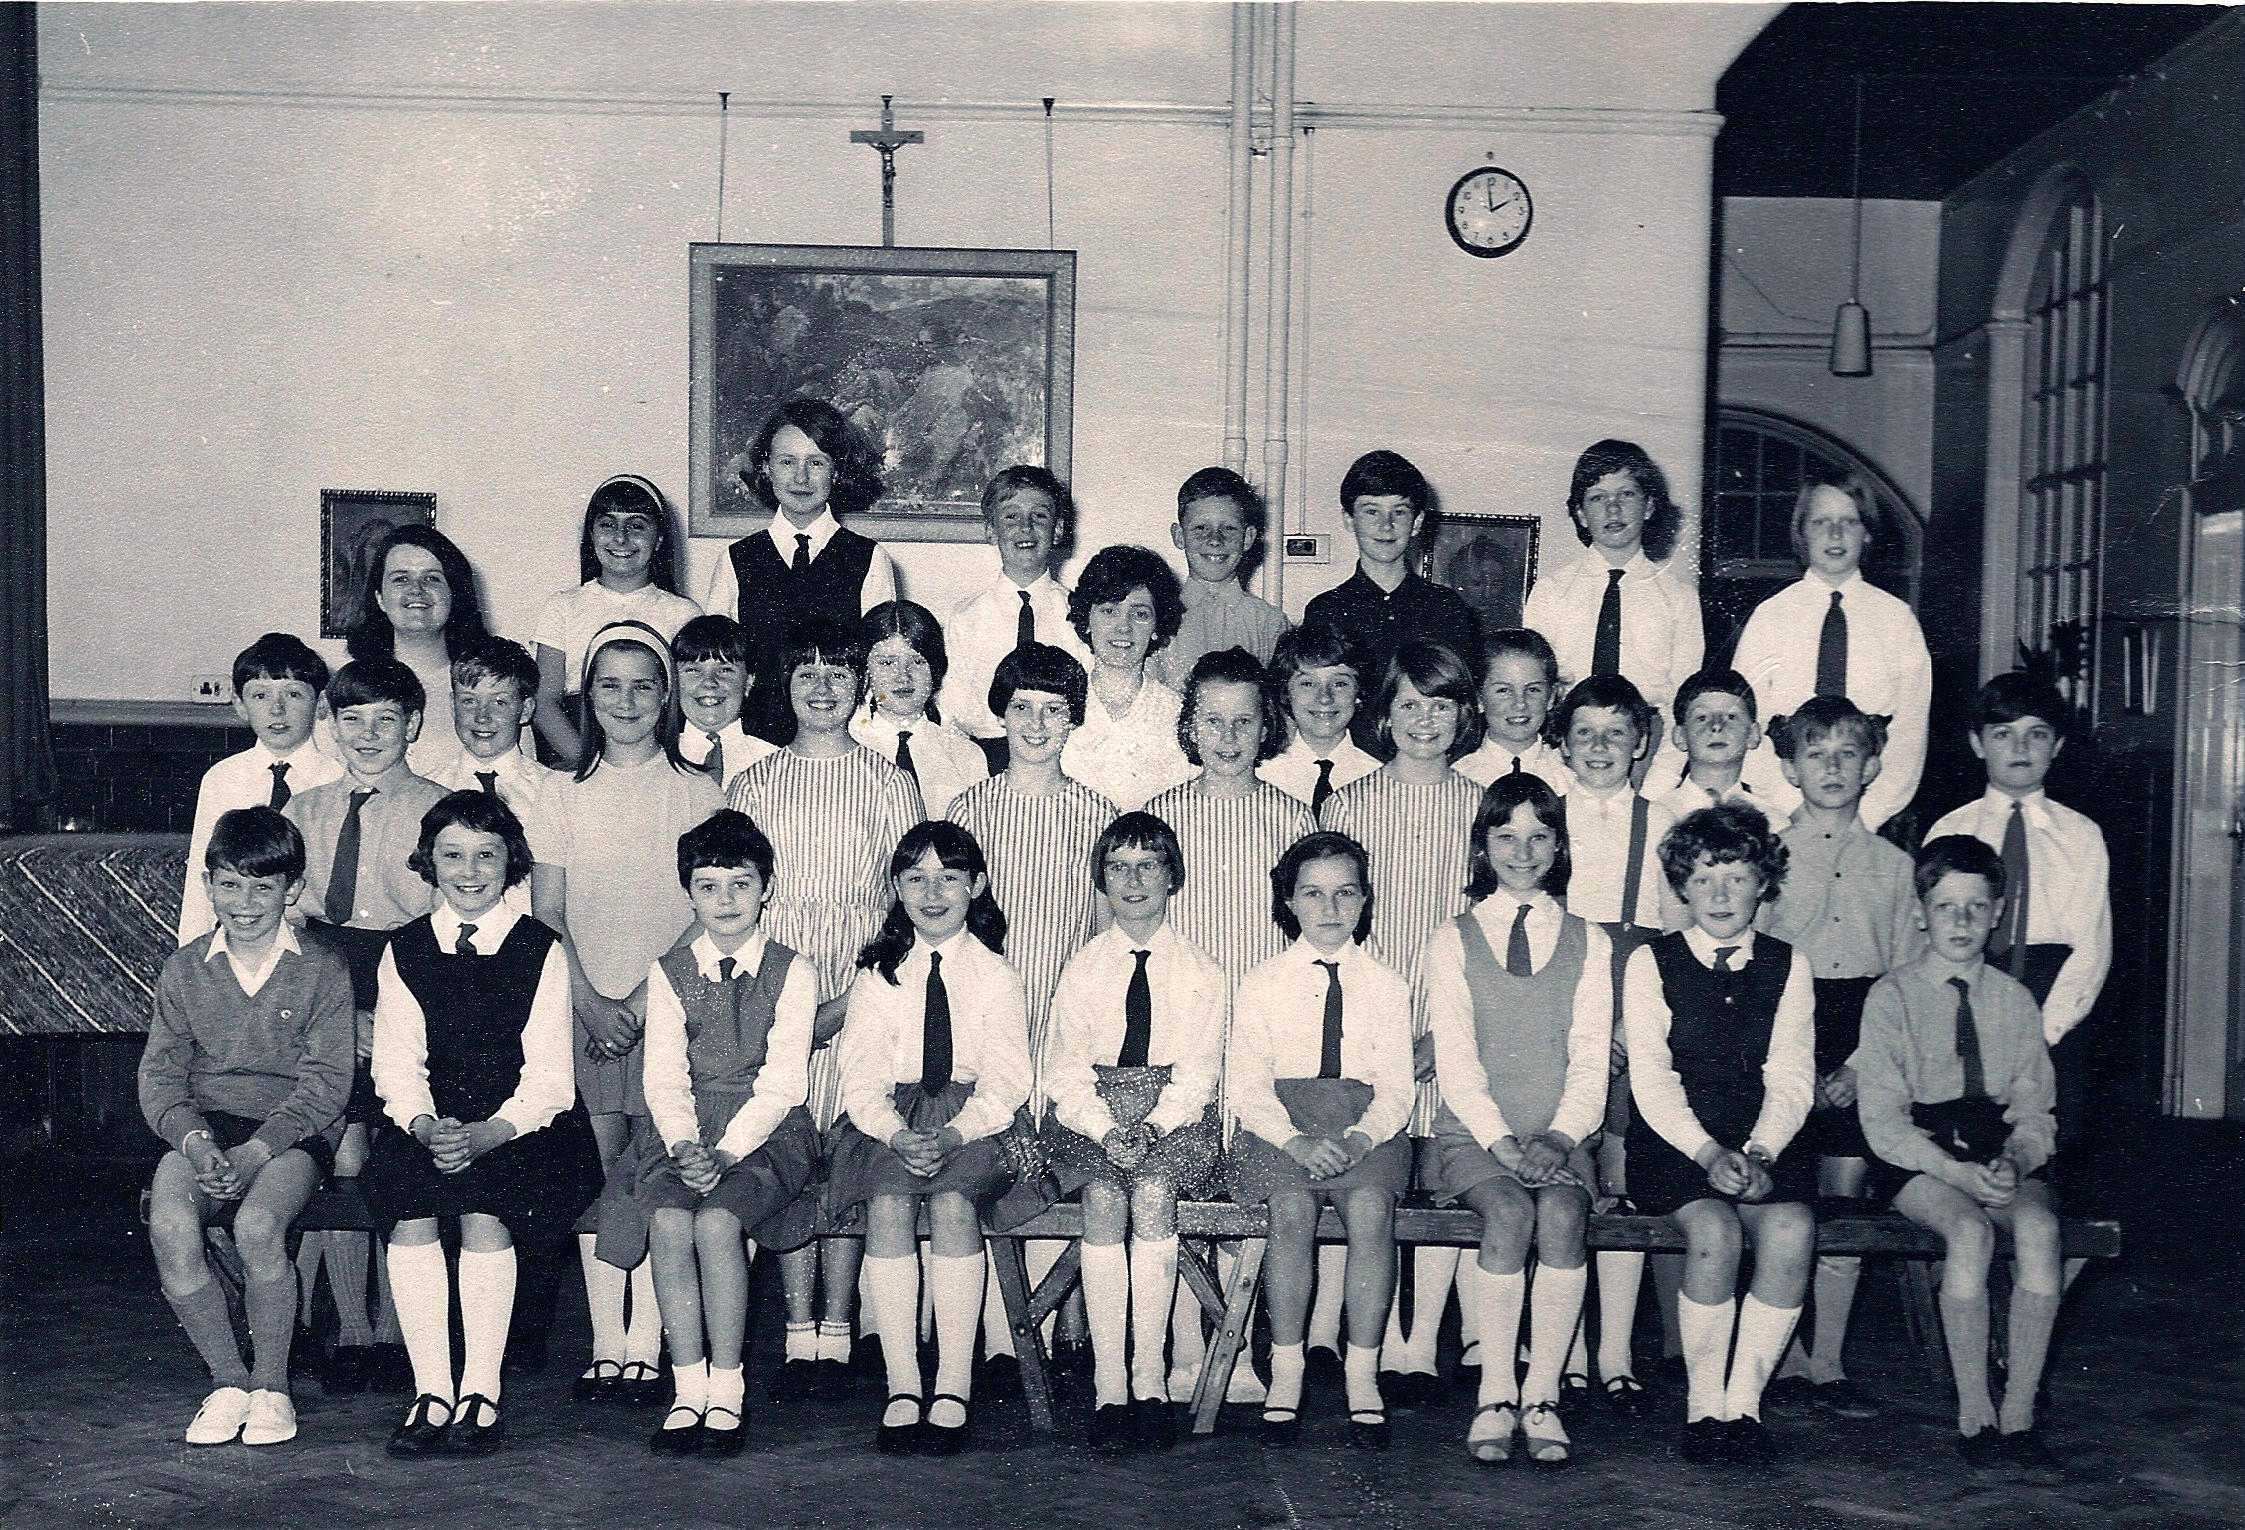 St Werburgh's School Choir